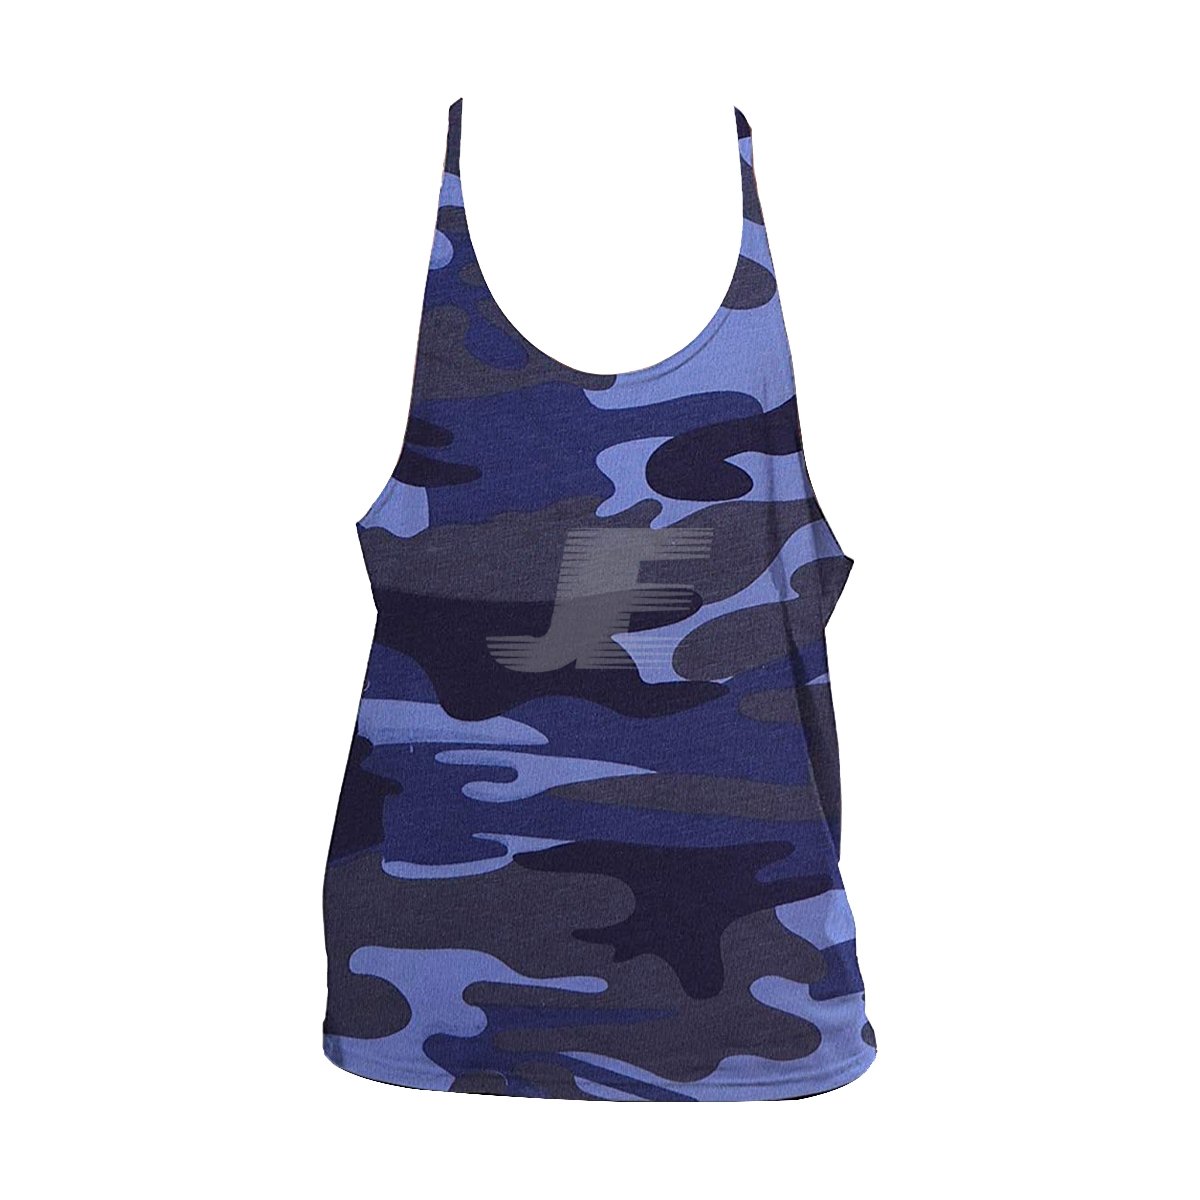 Men’s Gym Wear Cotton Blue Camouflage Stringer Tank Top